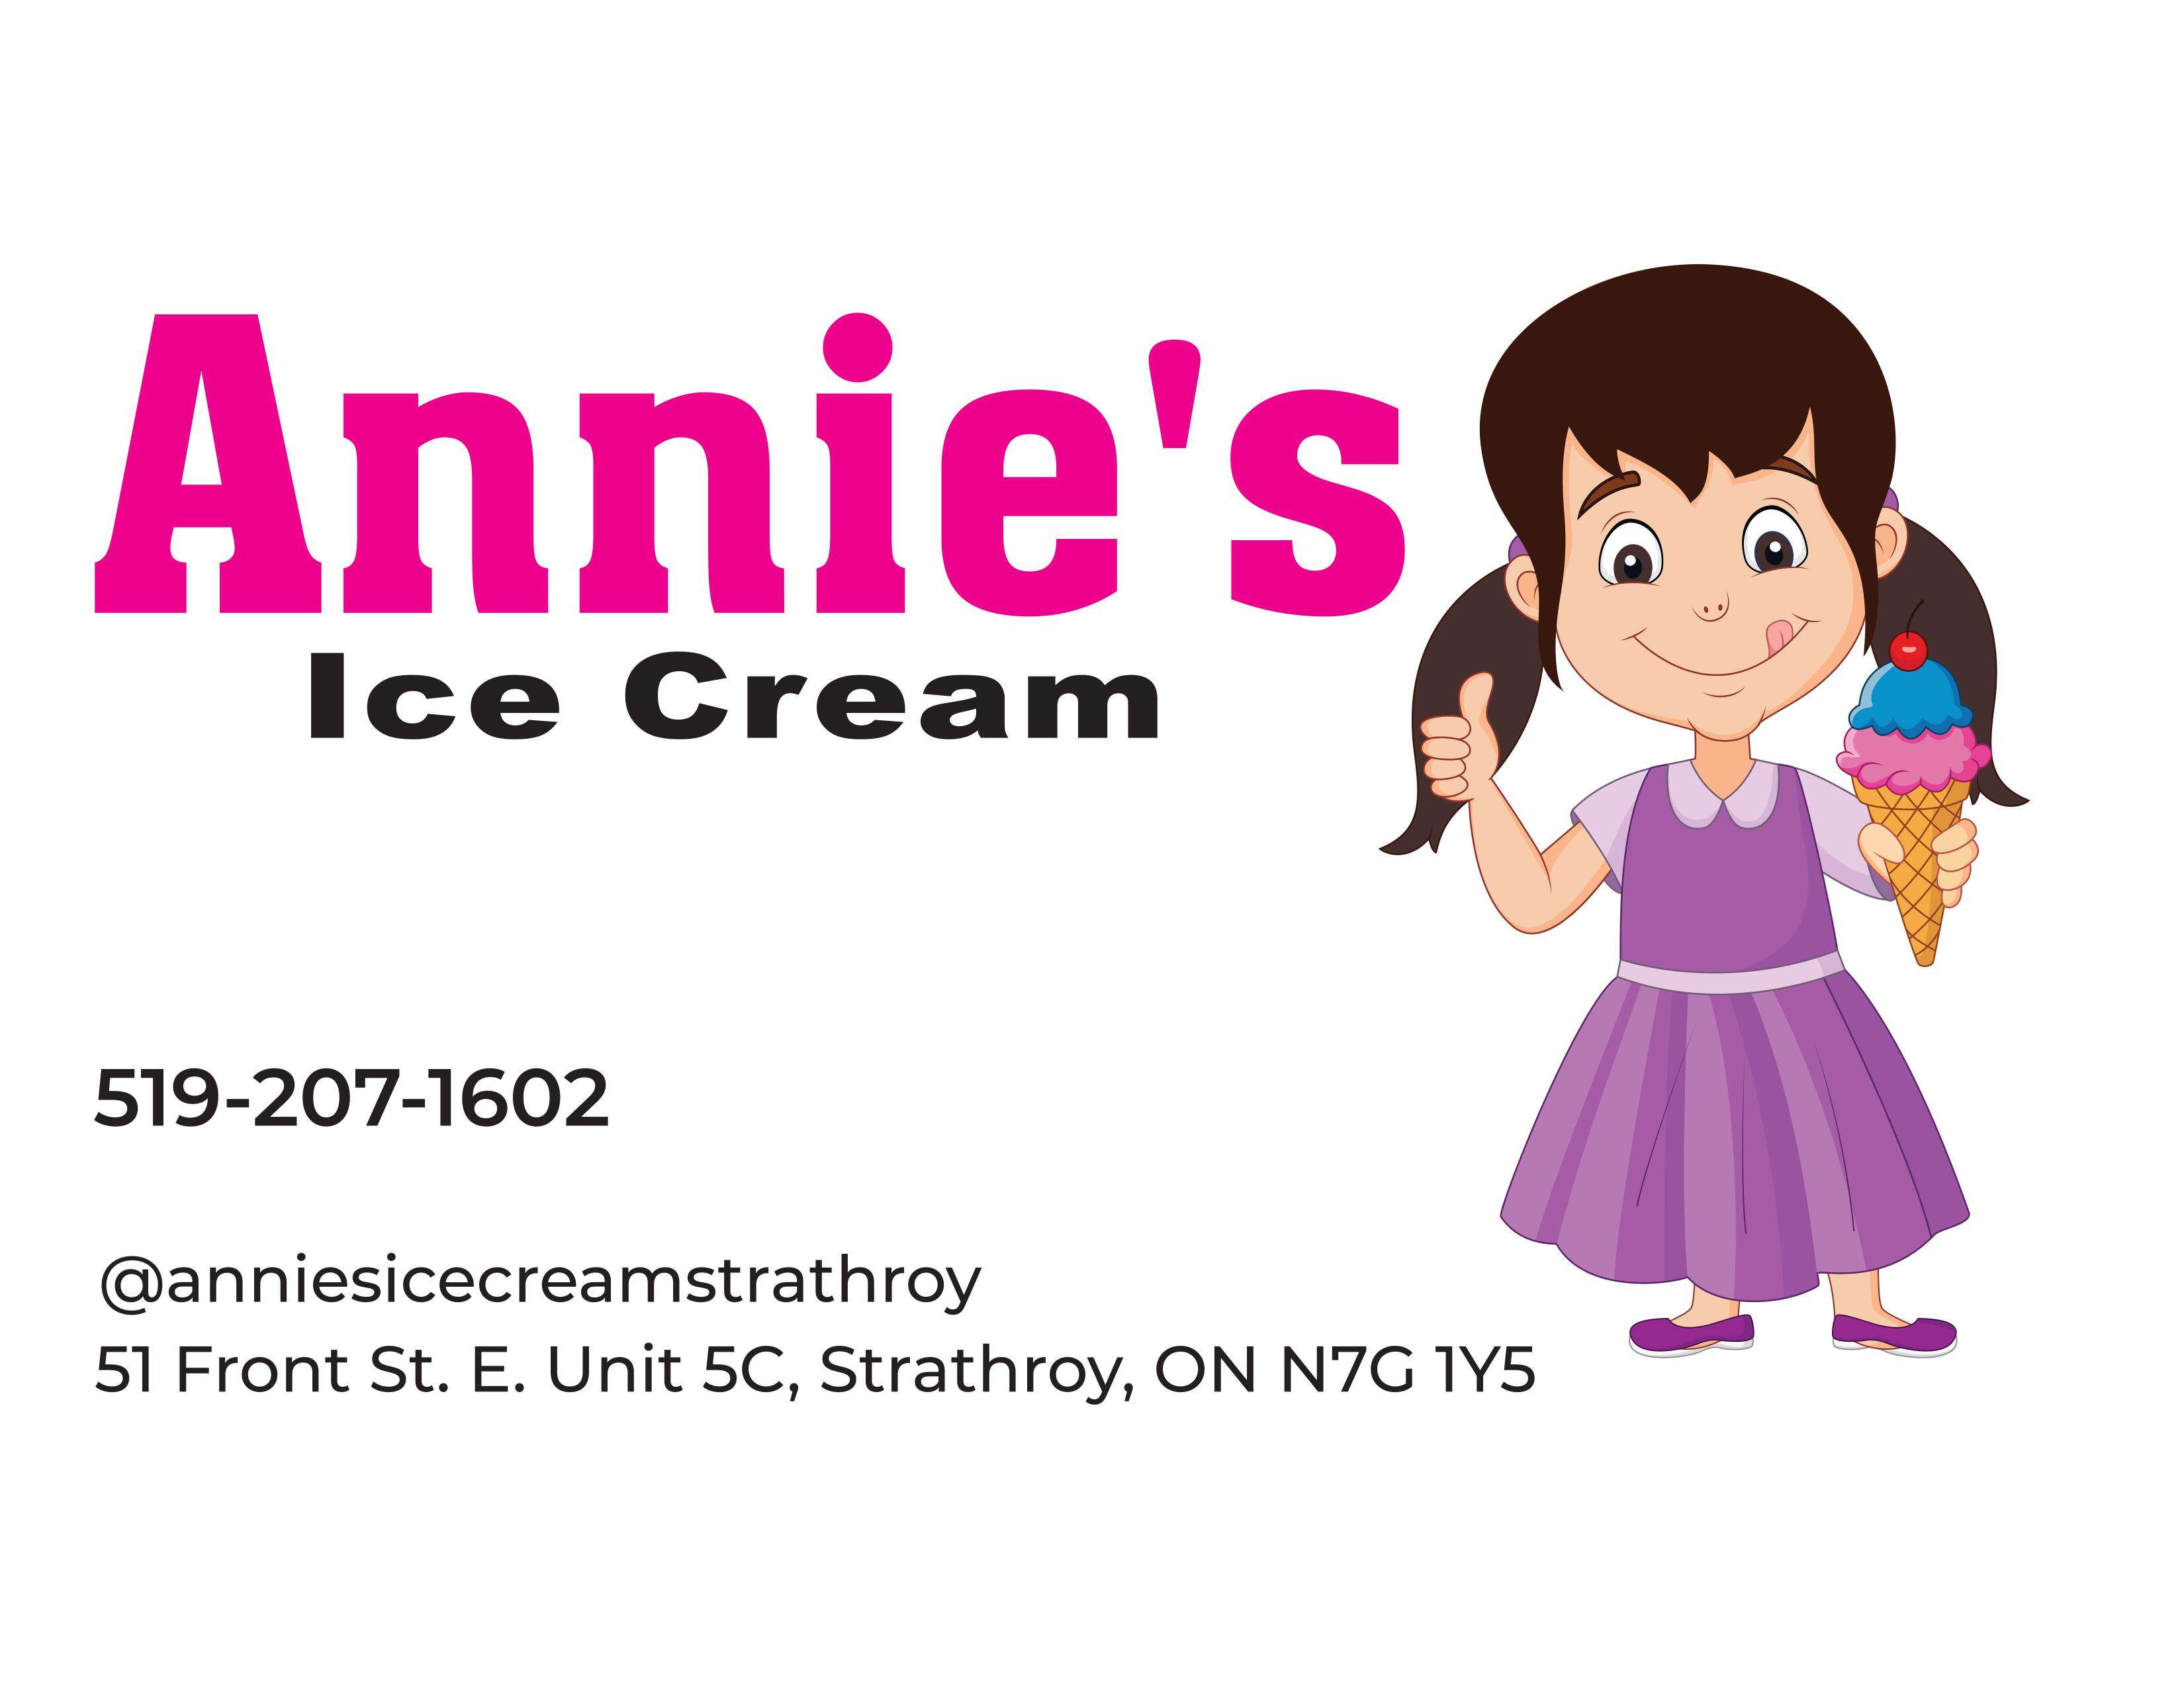 Annie's Ice Cream